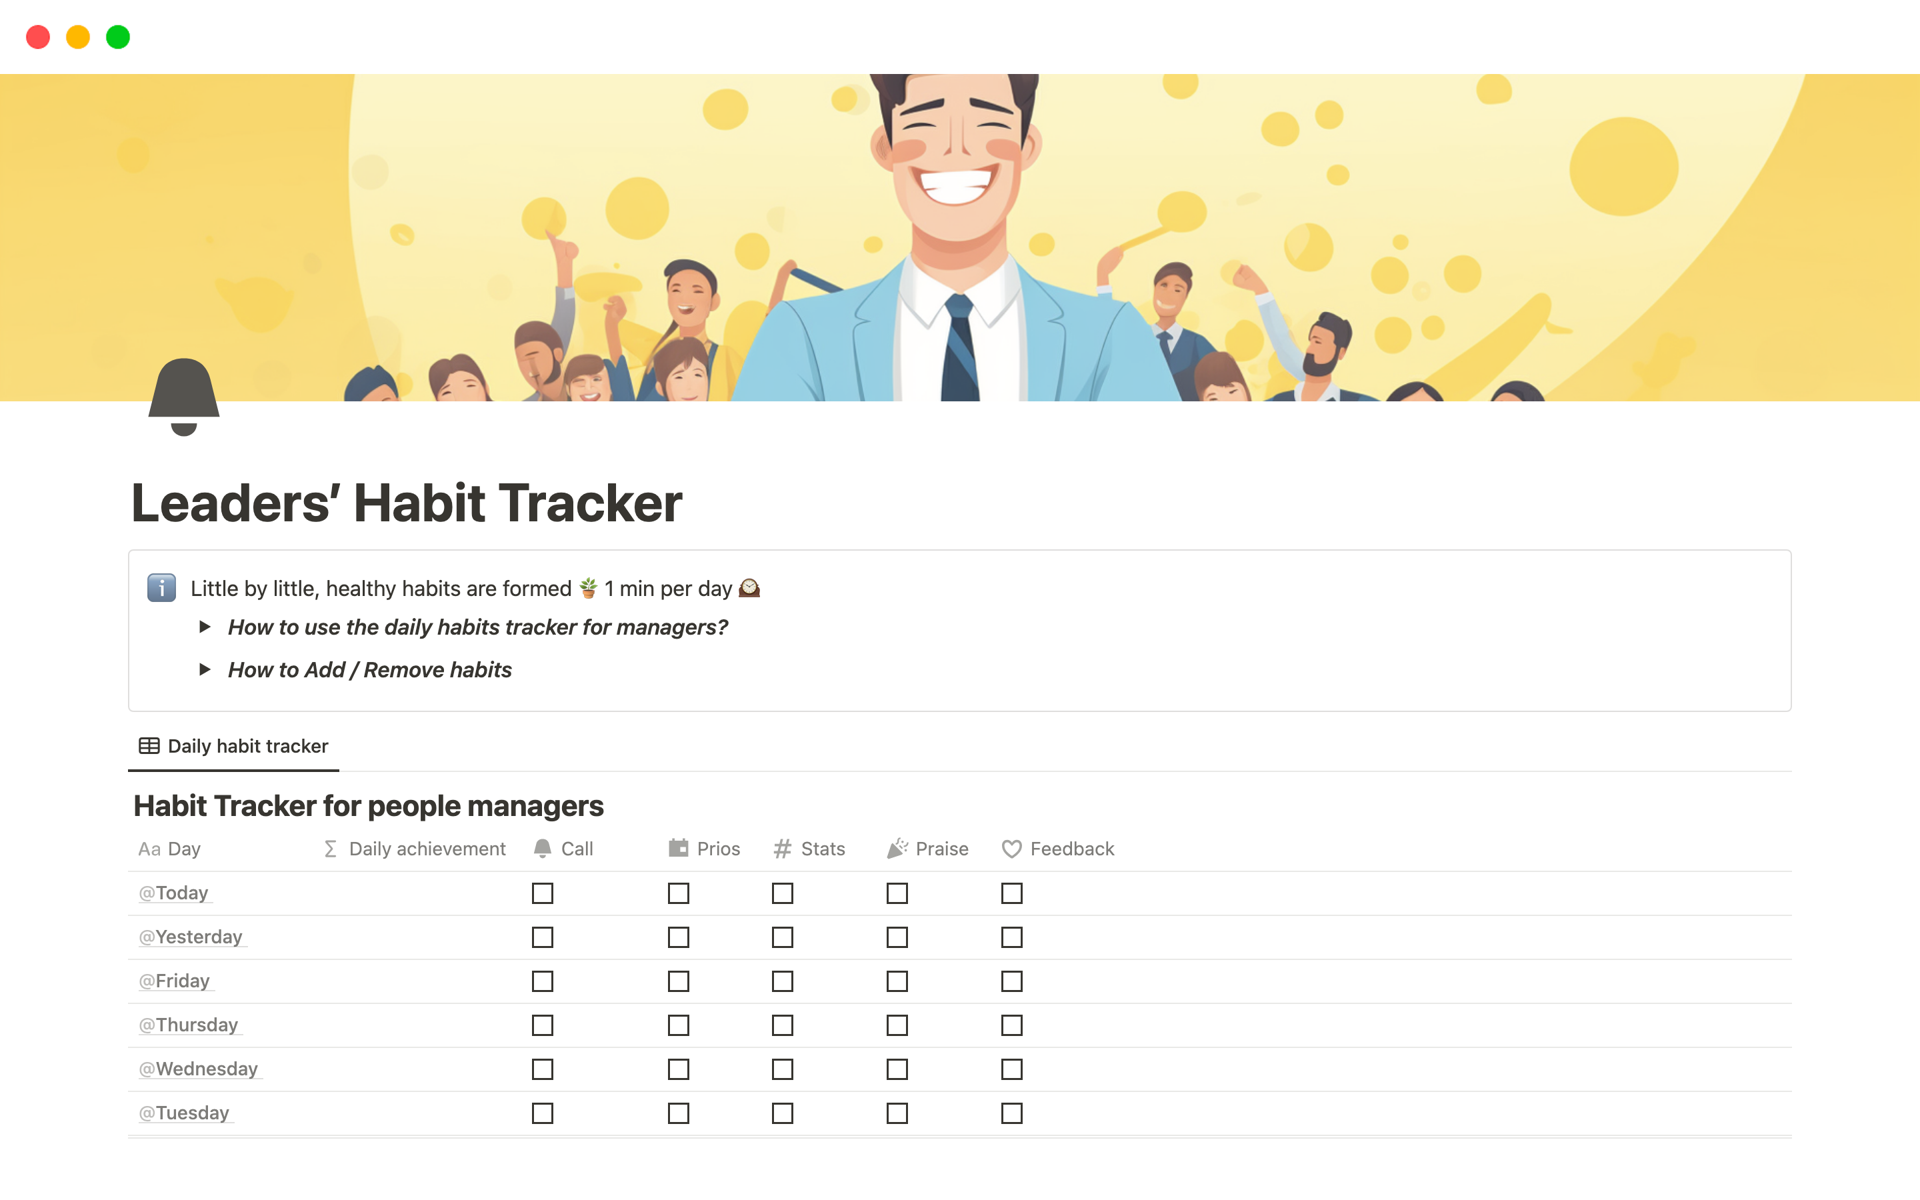 Leaders’ Habit Tracker 님의 템플릿 미리보기